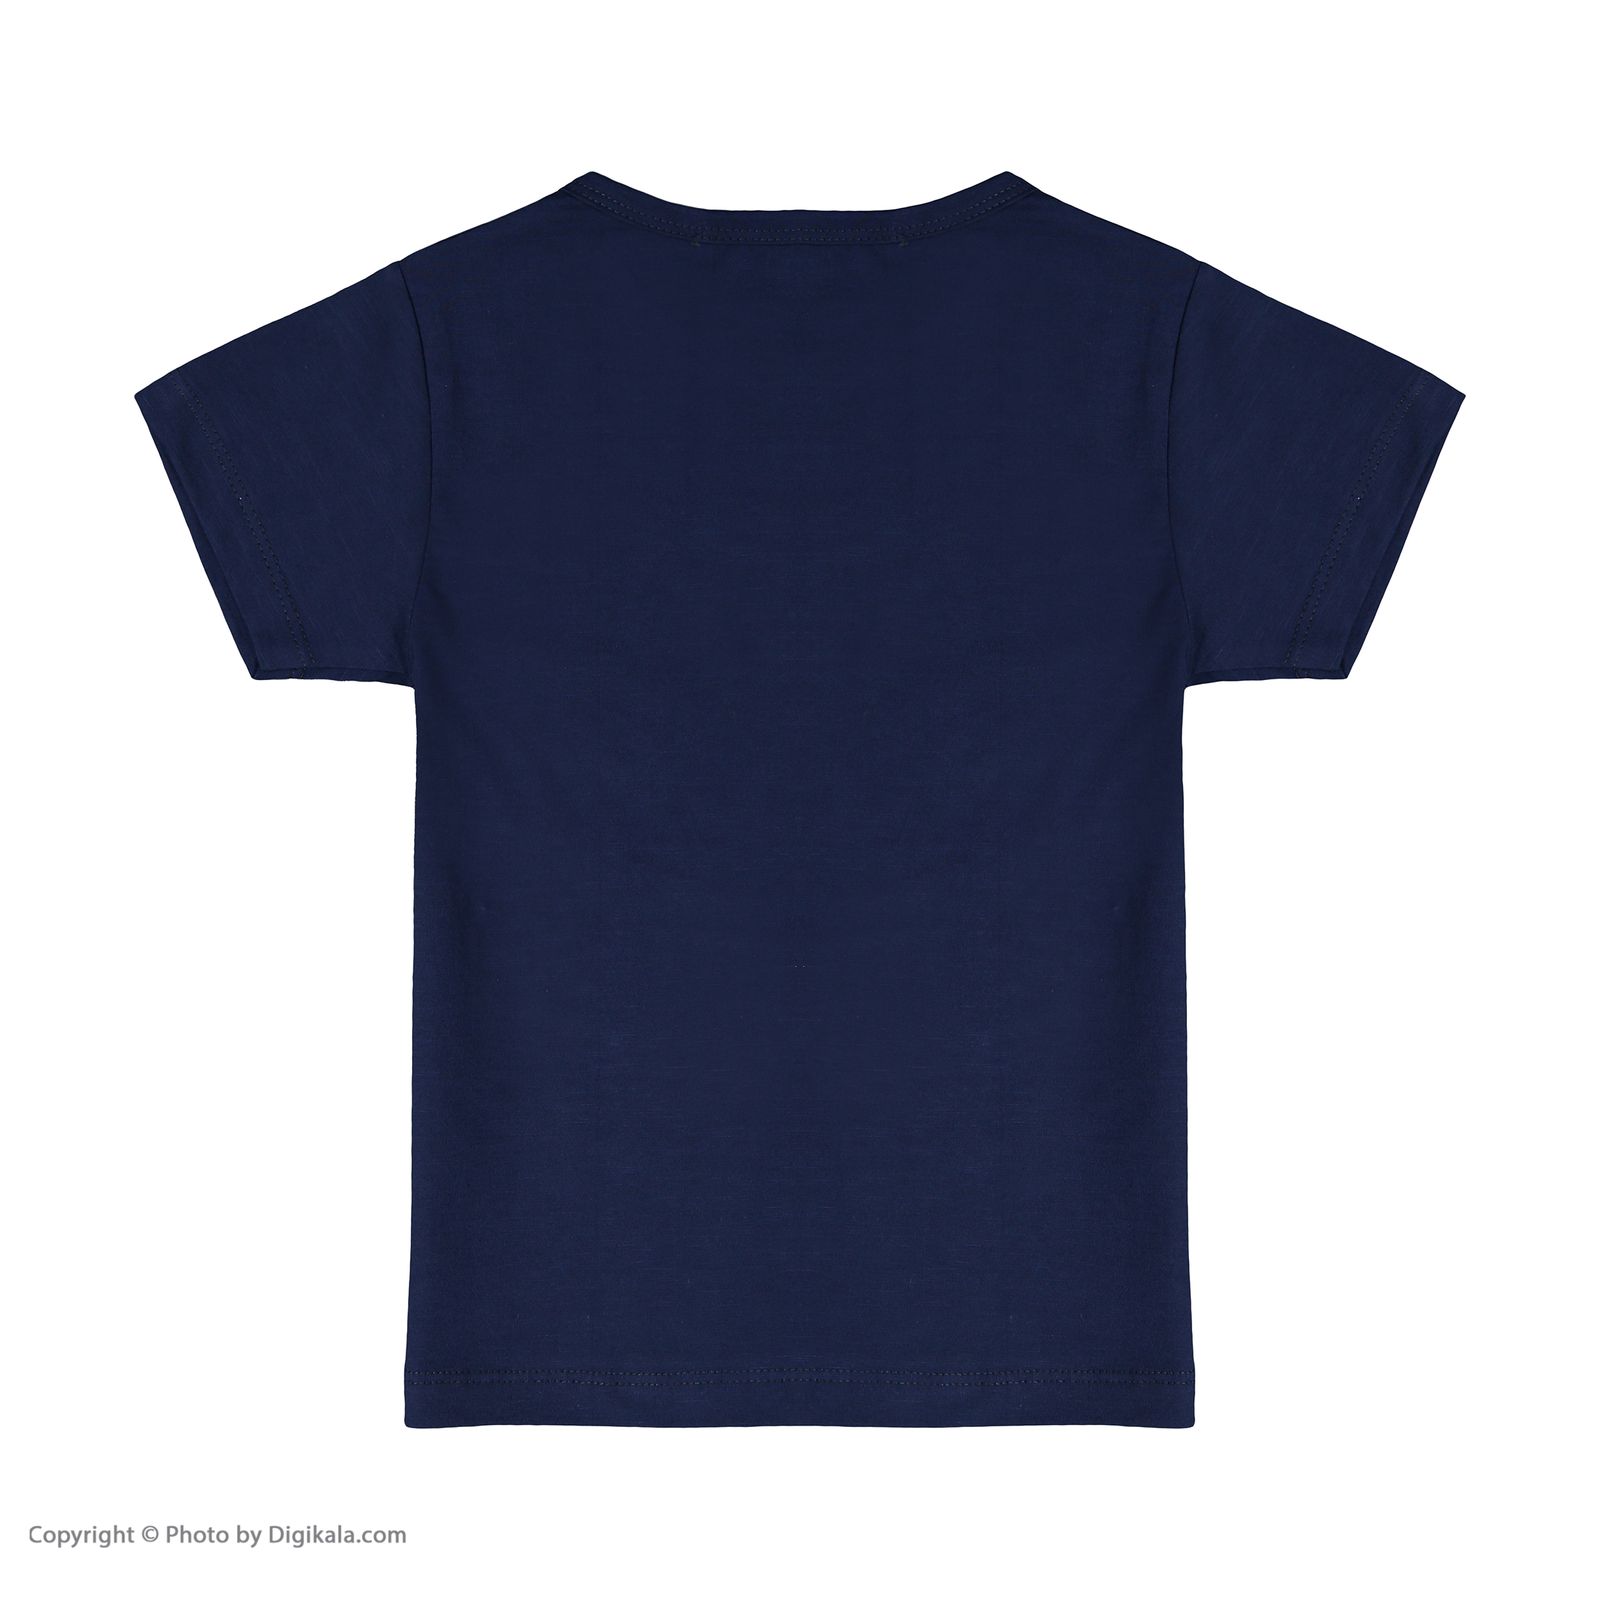 تی شرت پسرانه بی کی مدل 2211119-59 -  - 3